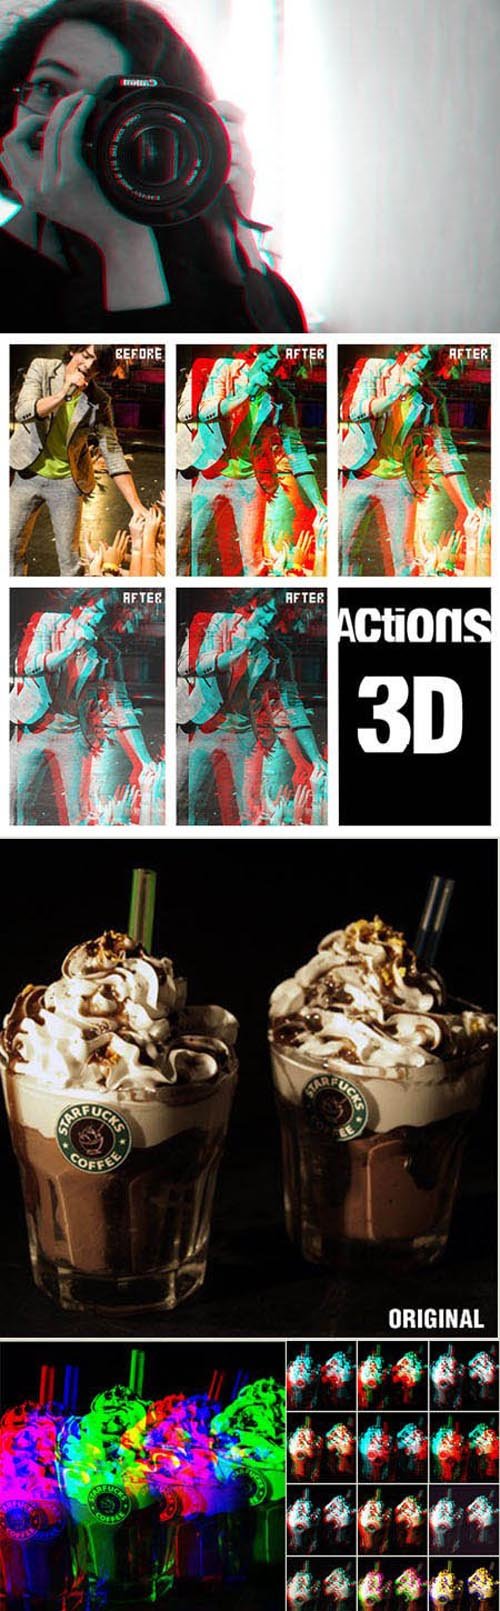 3D Transform Actions for Photoshop